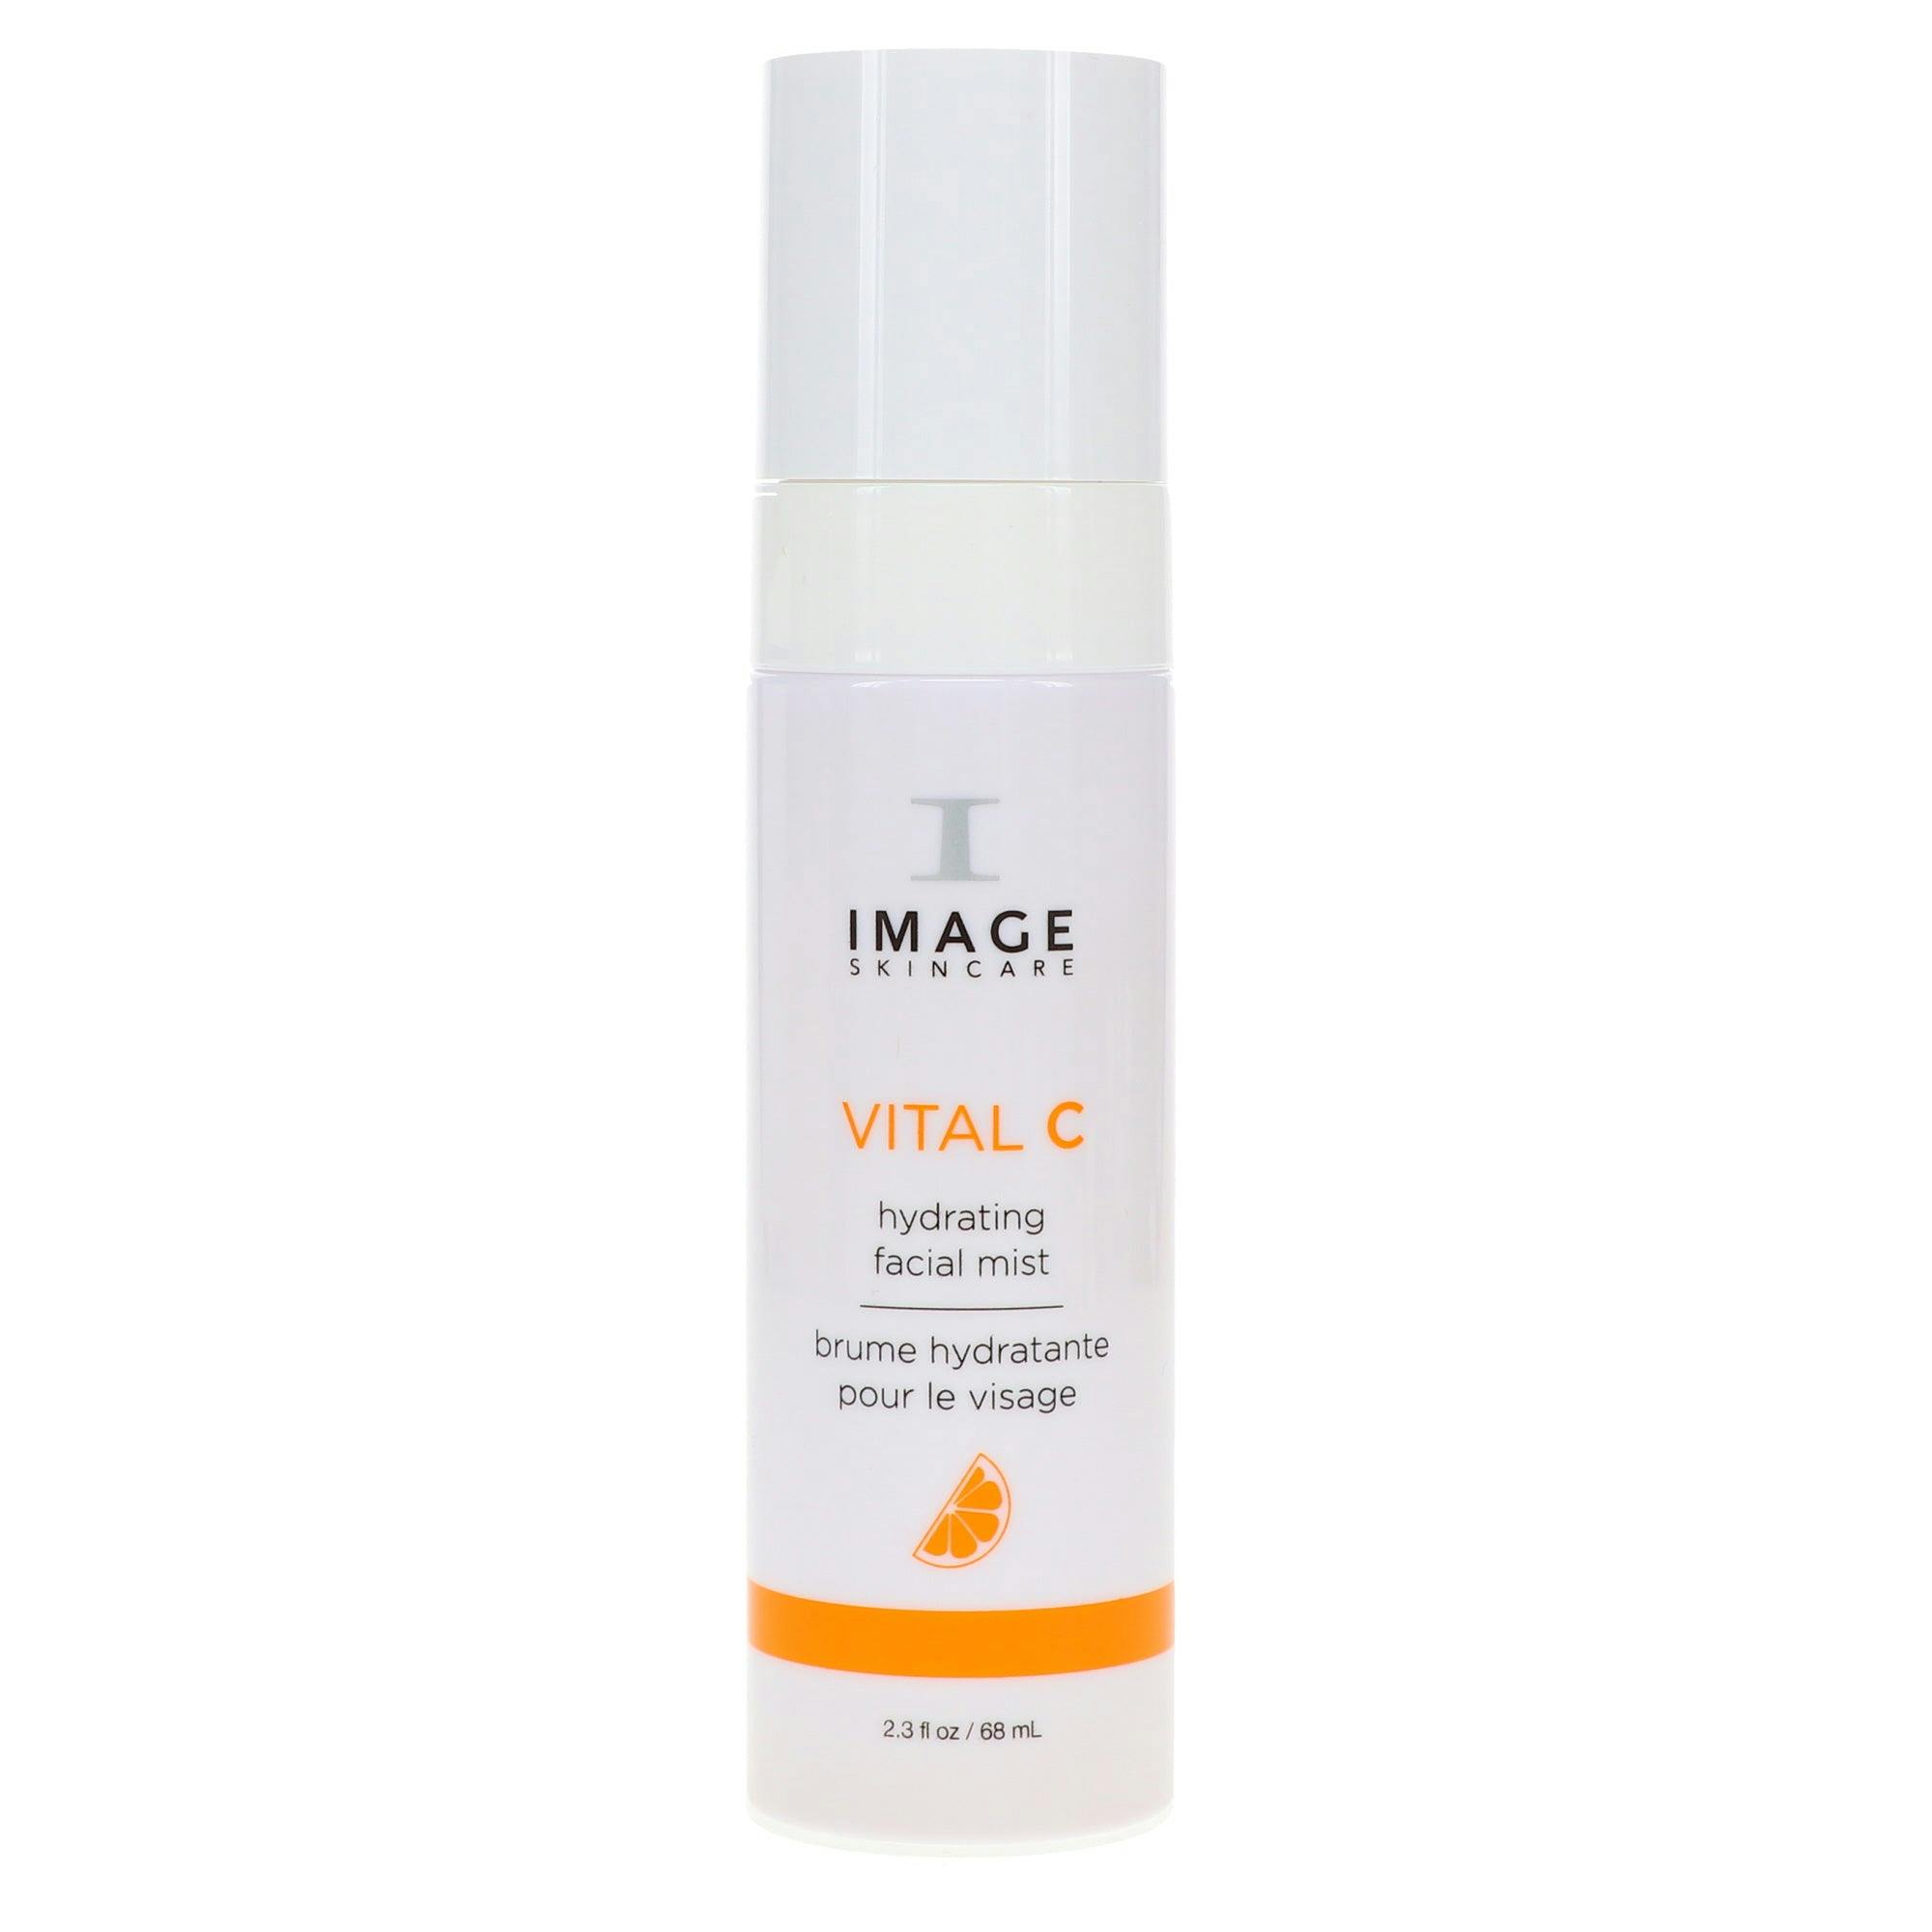 Image Skincare Vital C - Hydrating Facial Mist 68ml